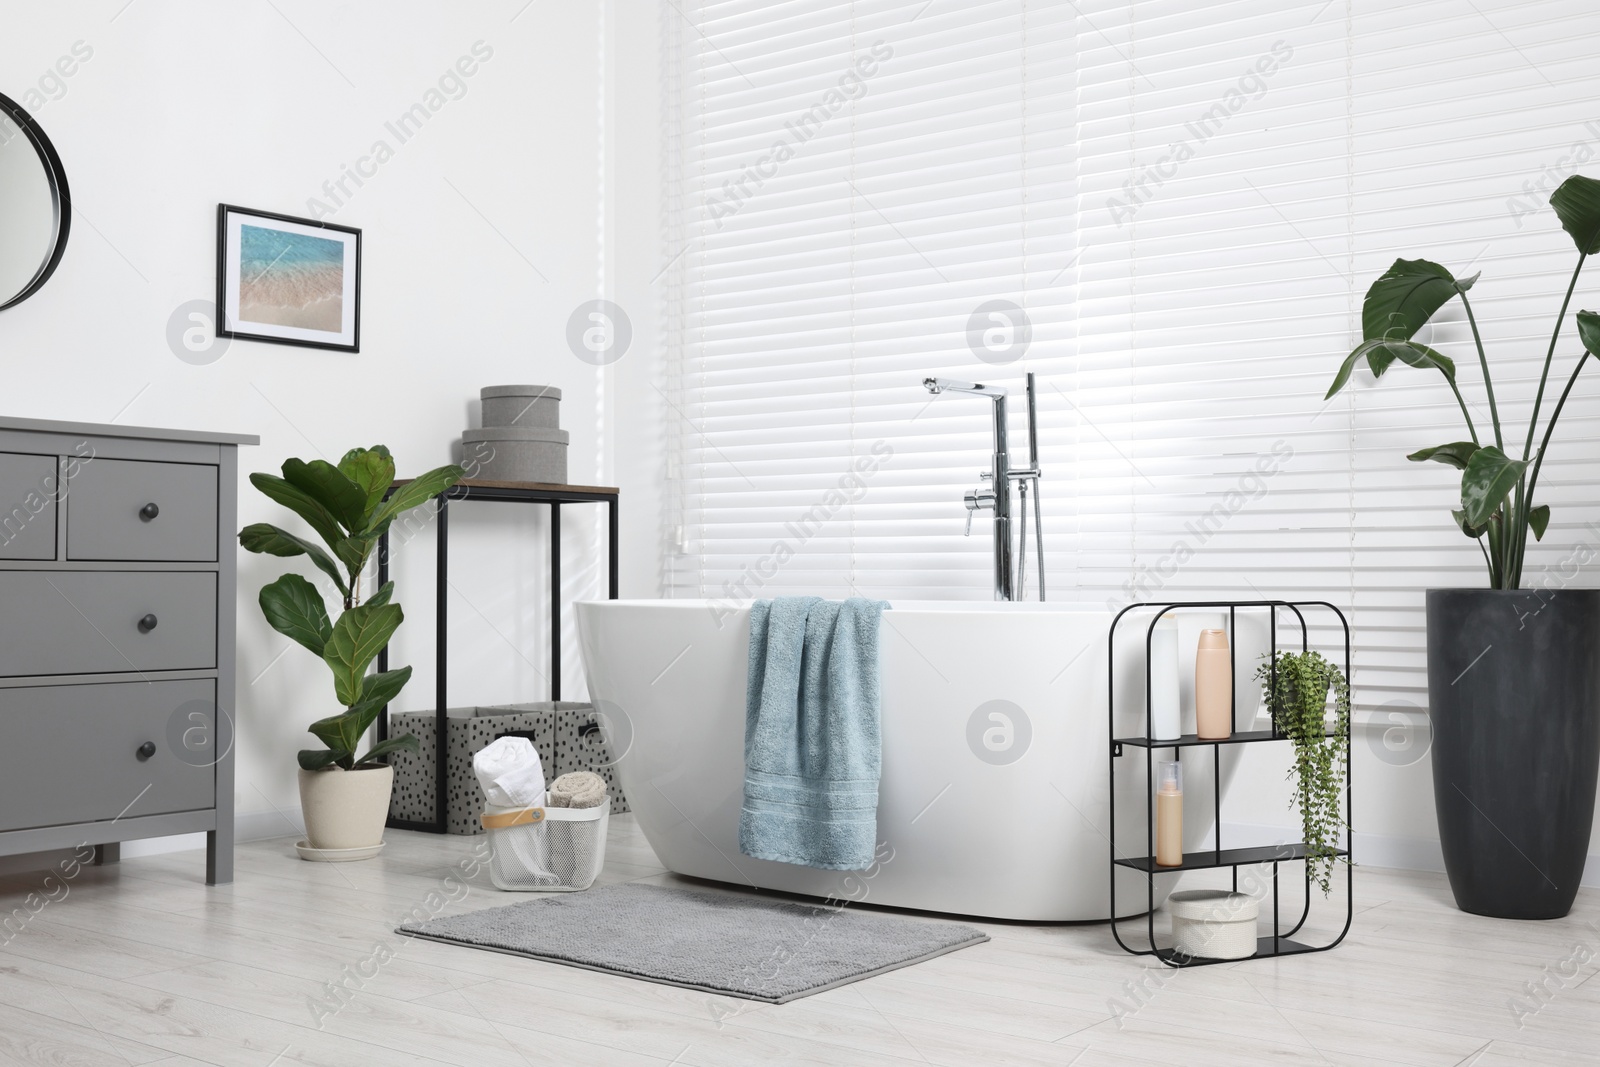 Photo of Stylish bathroom interior with bath tub, houseplants and soft light grey mat